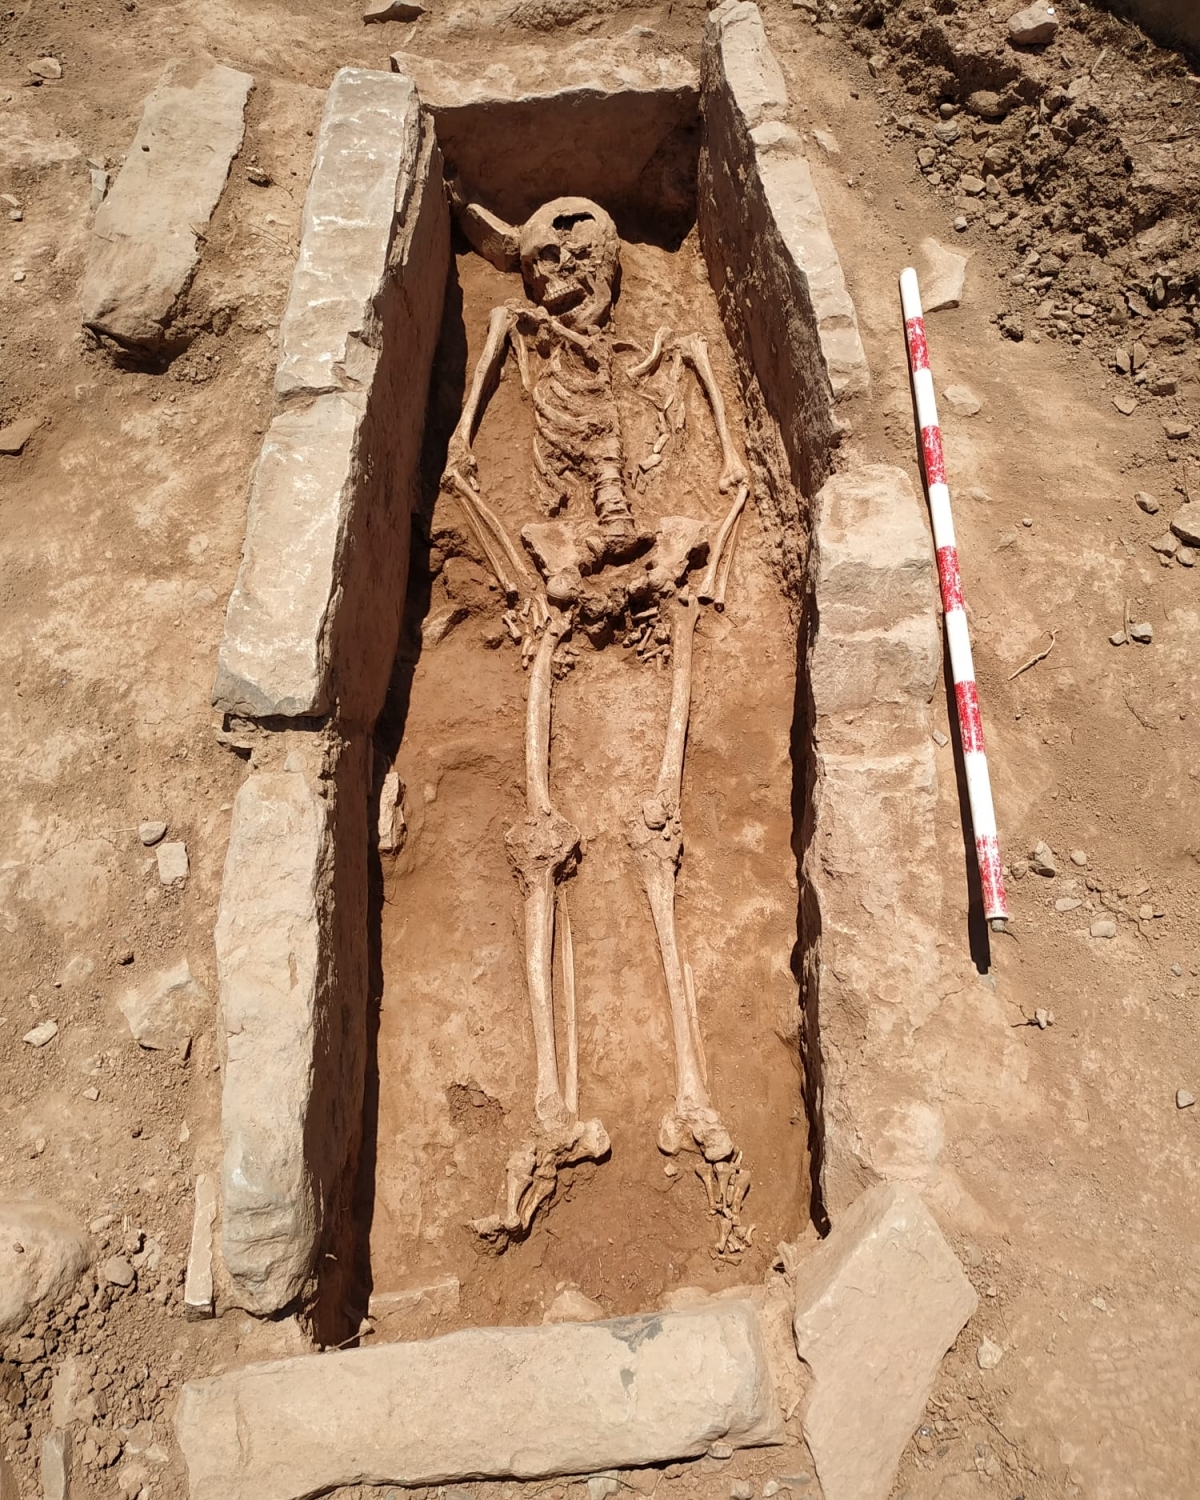 Un subjecte de 30 anys, entre les restes trobades